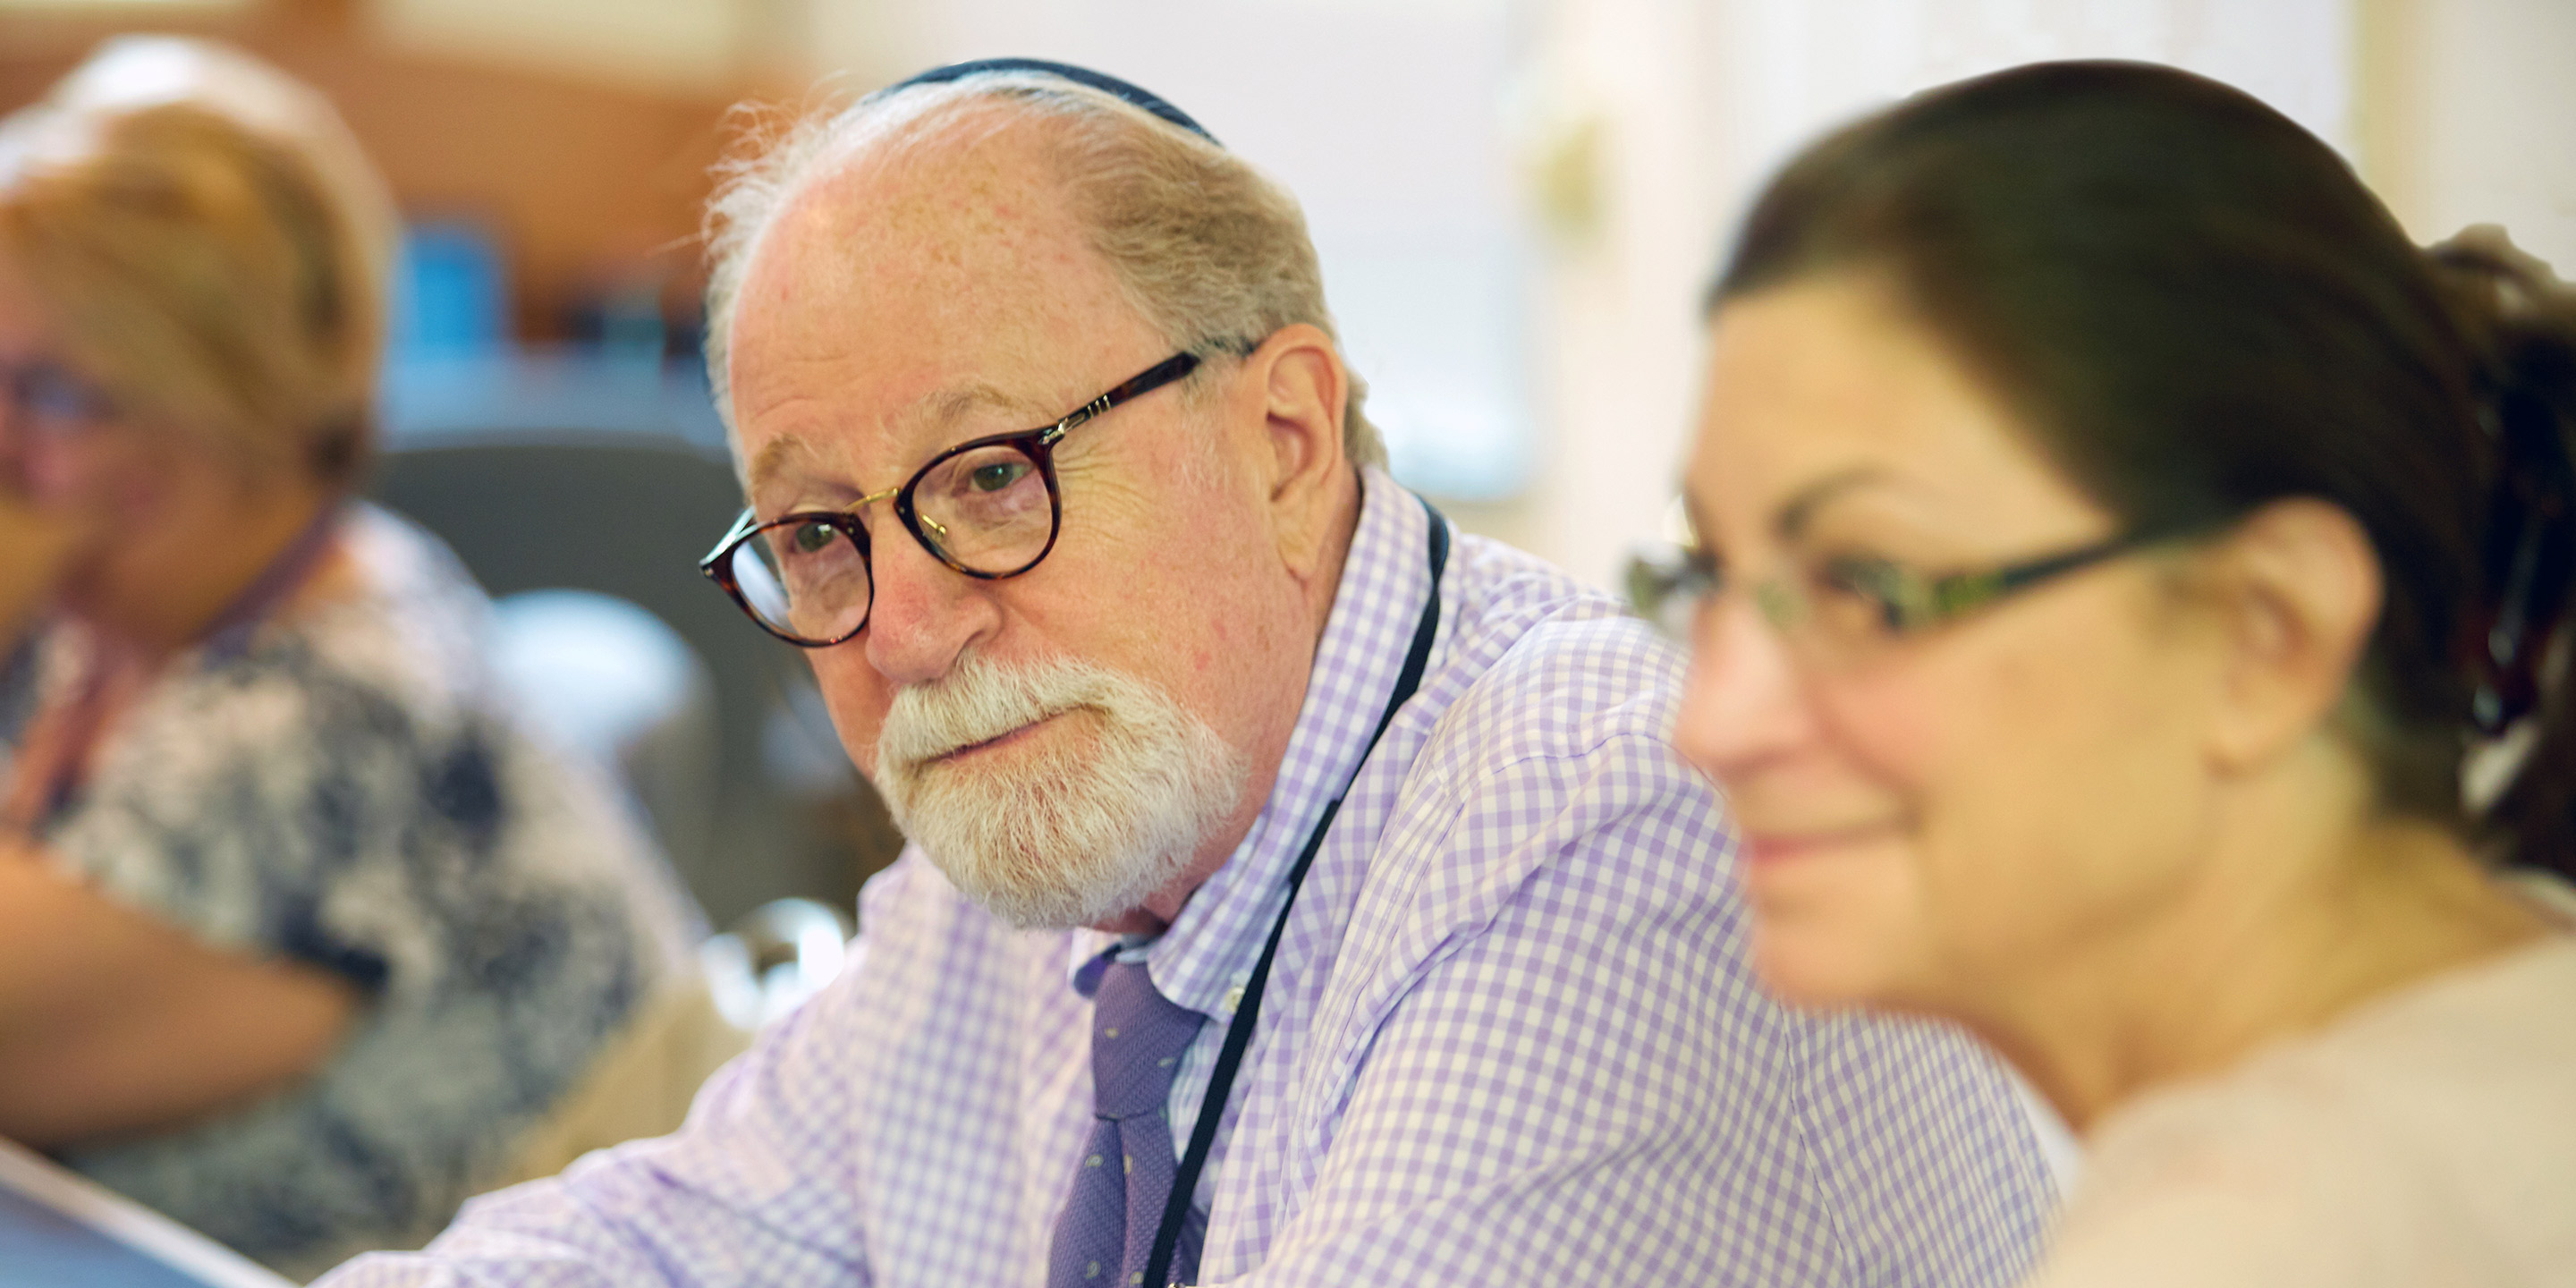 Rabbi Joel Baron